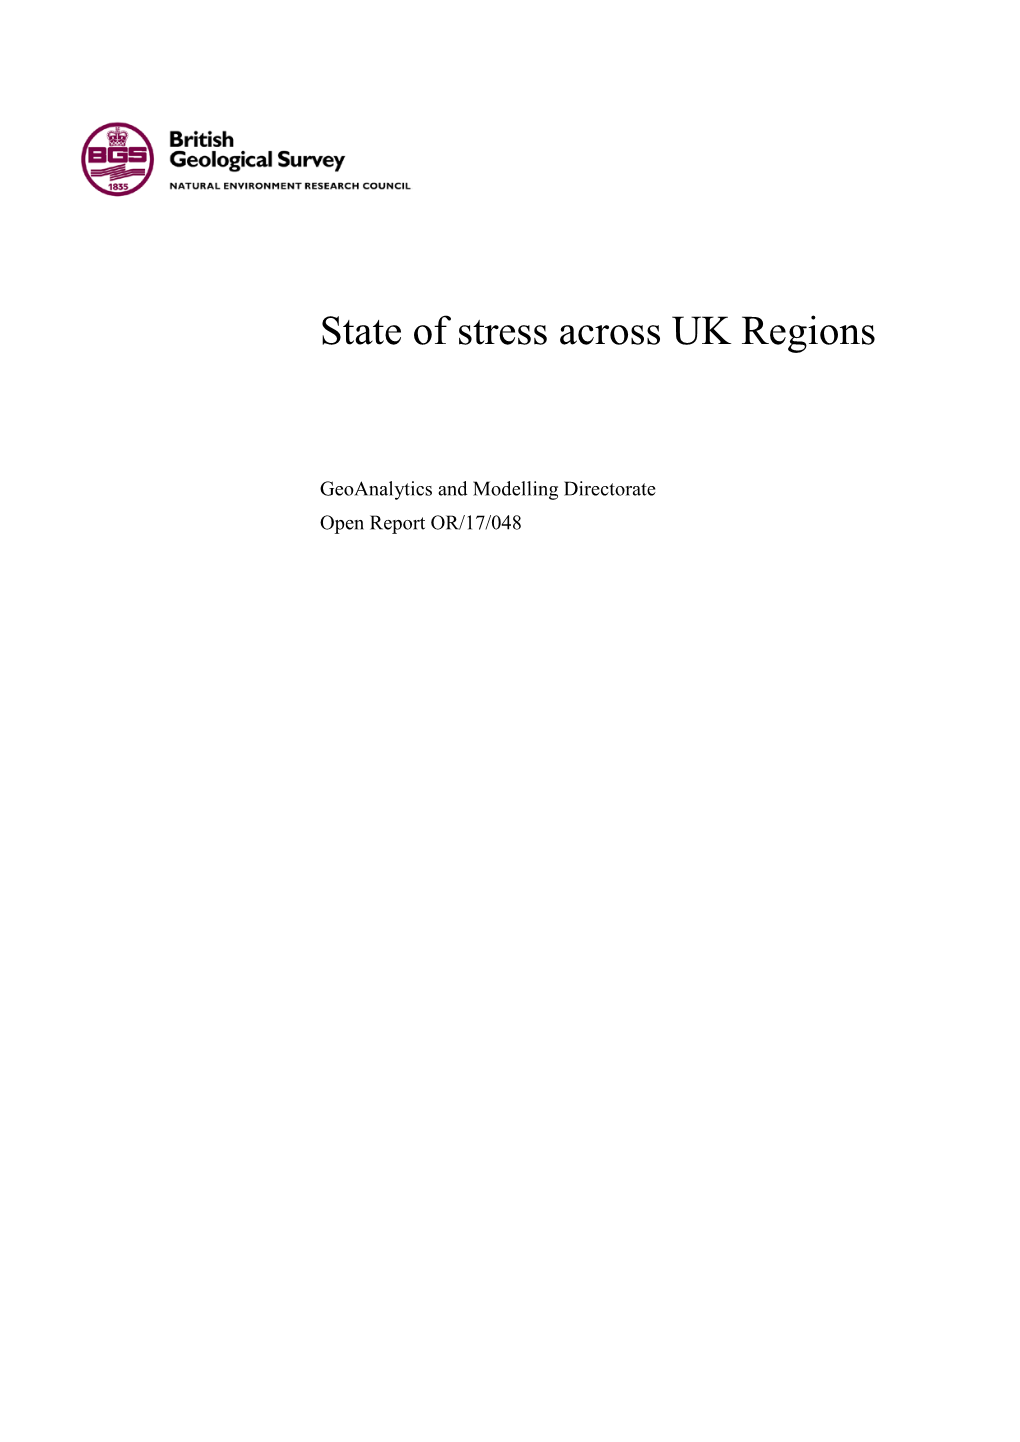 State of Stress Across UK Regions